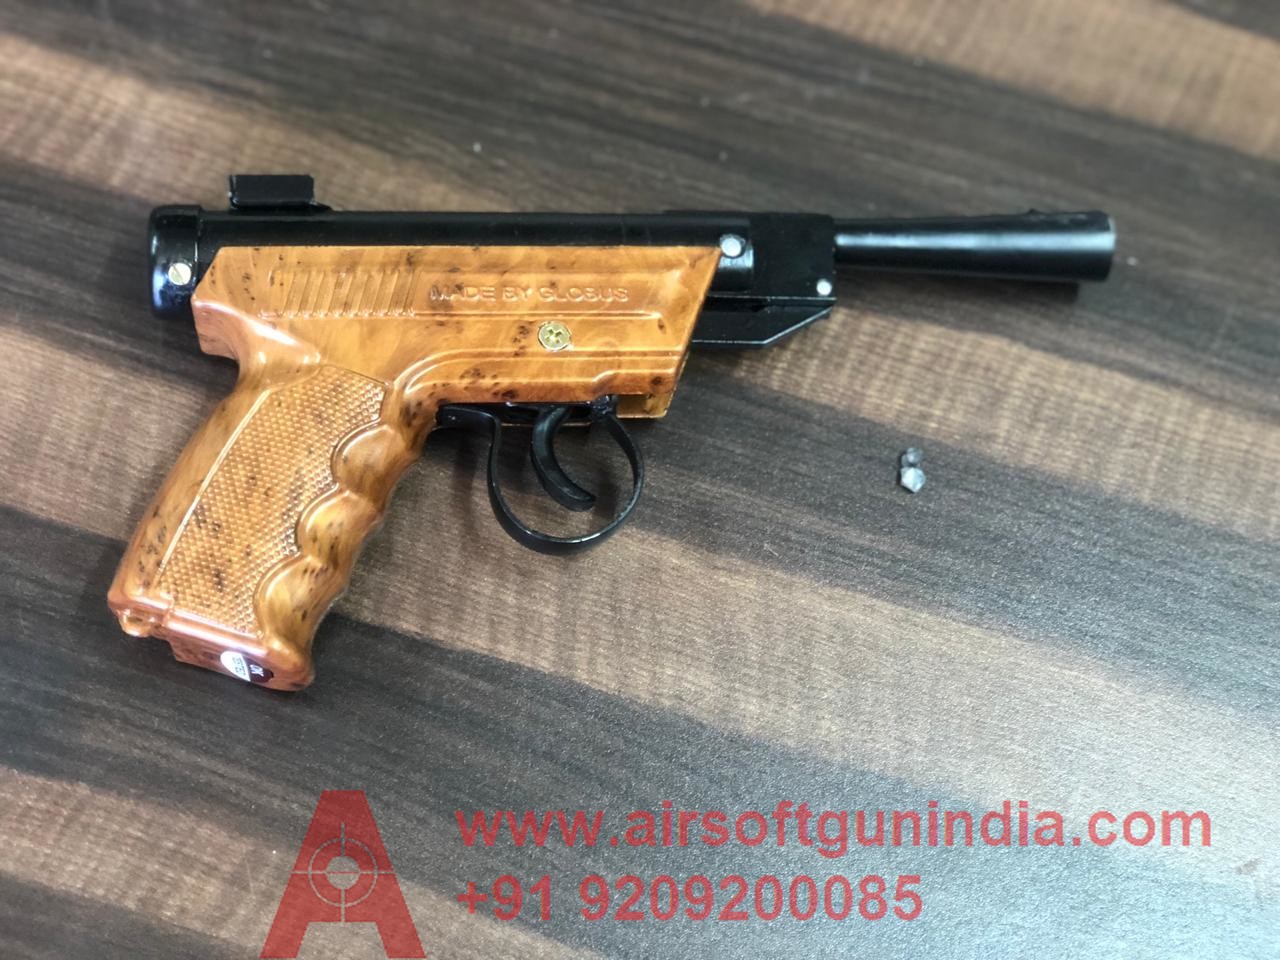 Power Sports Air Pistol By Airsoft Gun India Wooden Texture